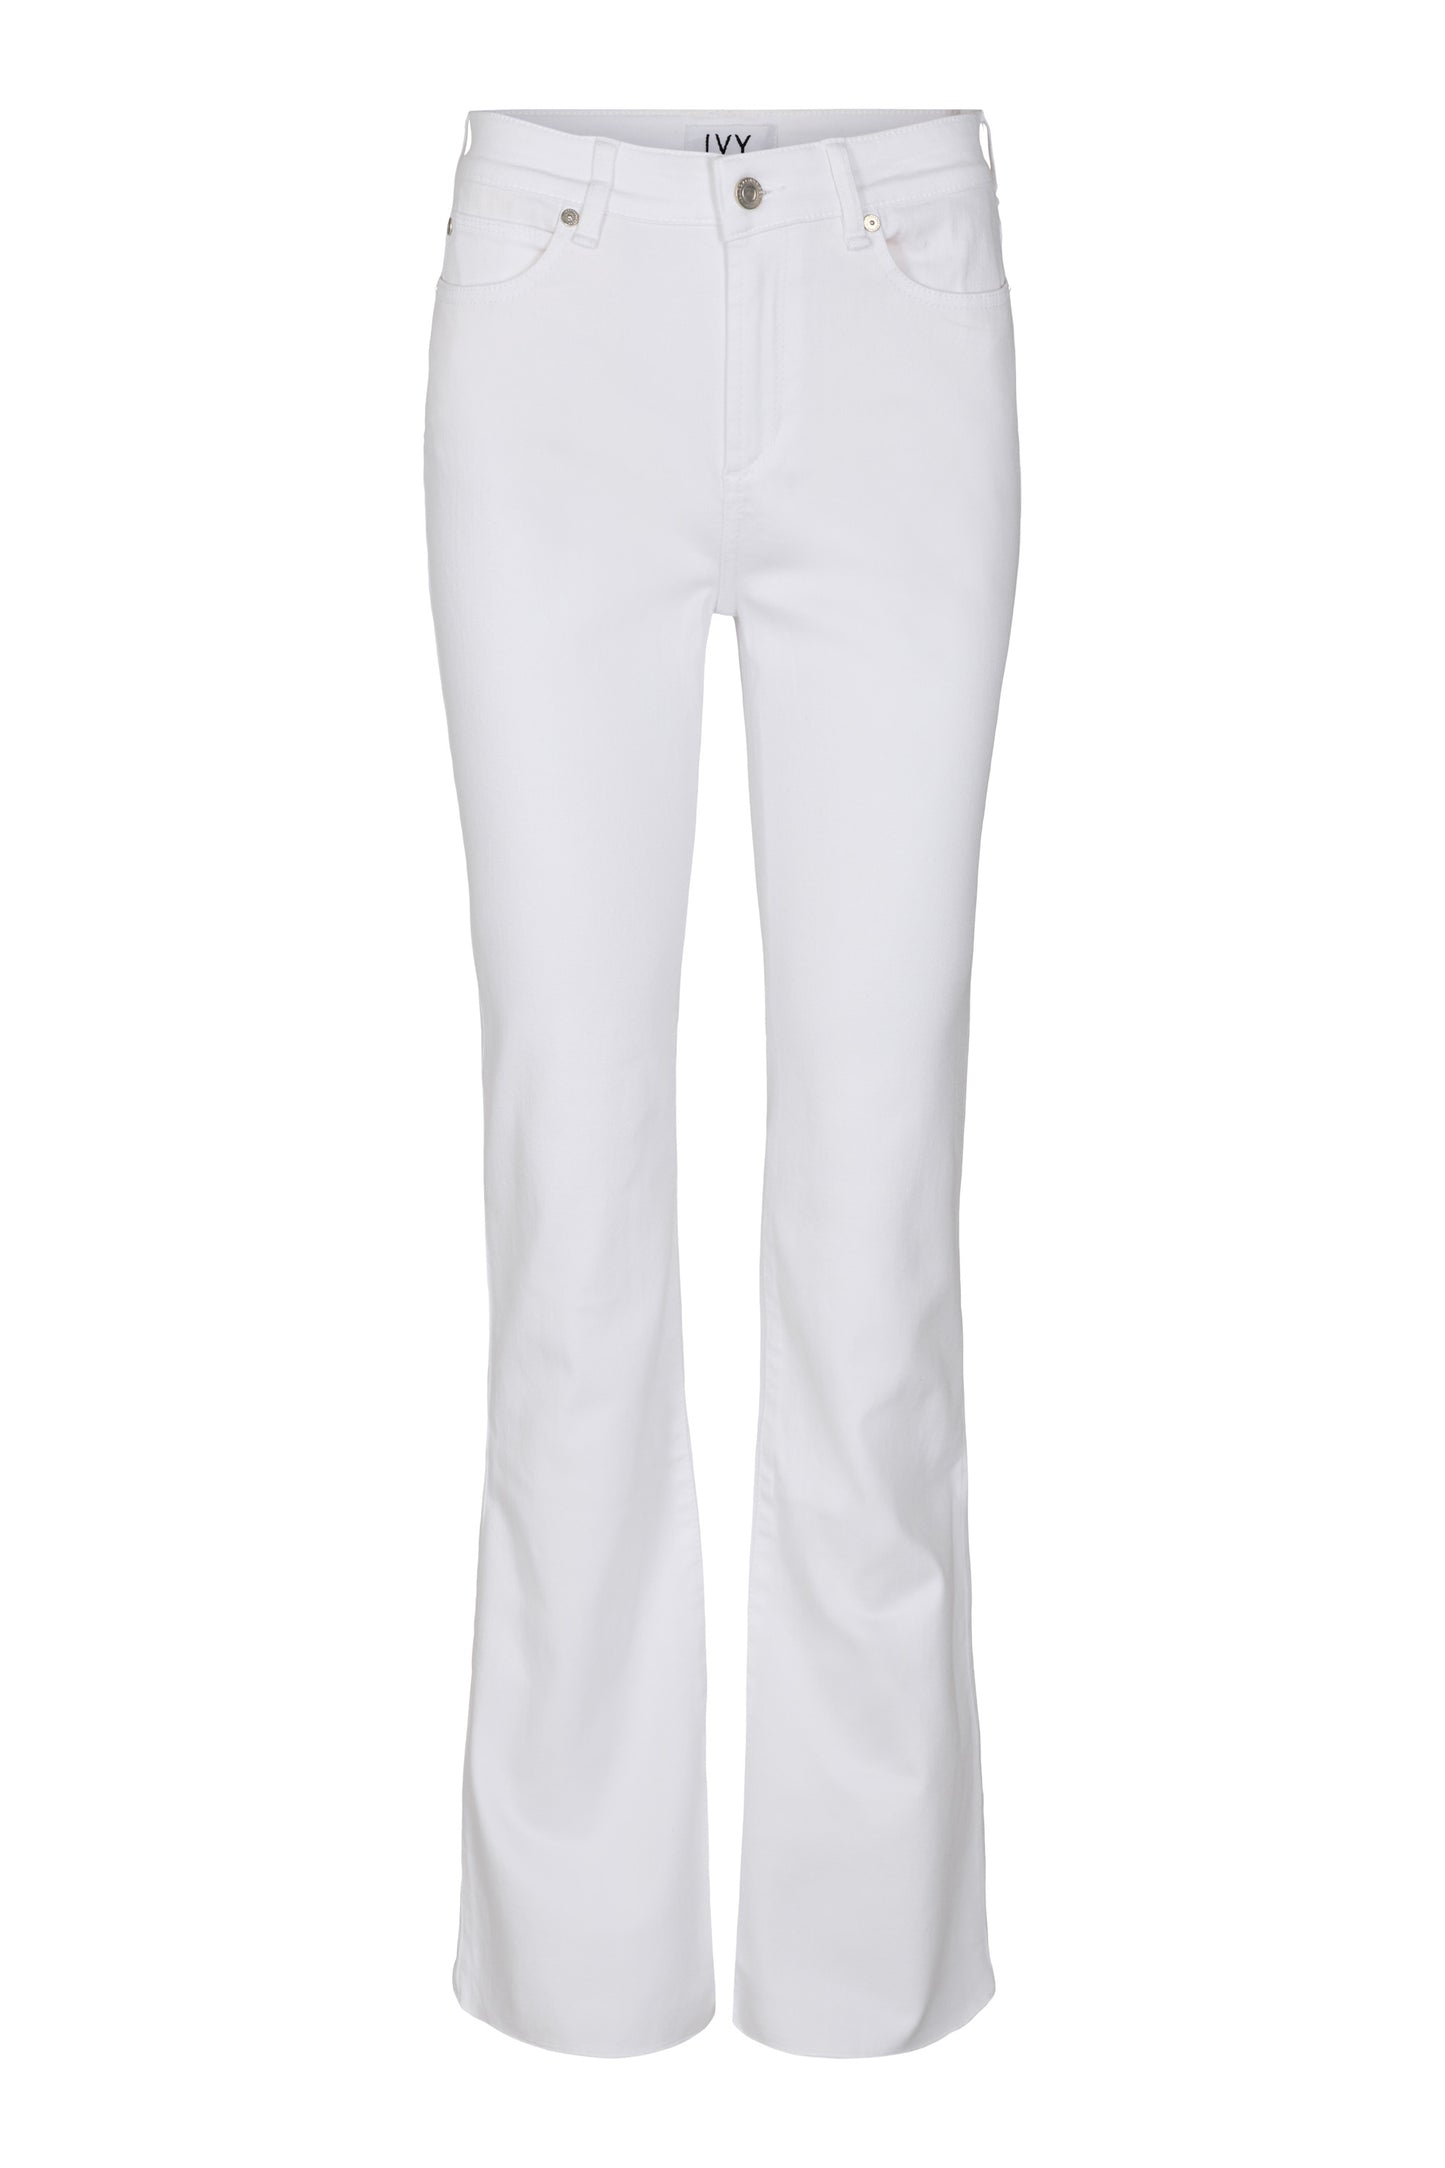 IVY Copenhagen IVY-Tara Jeans White Jeans & Pants 01 White